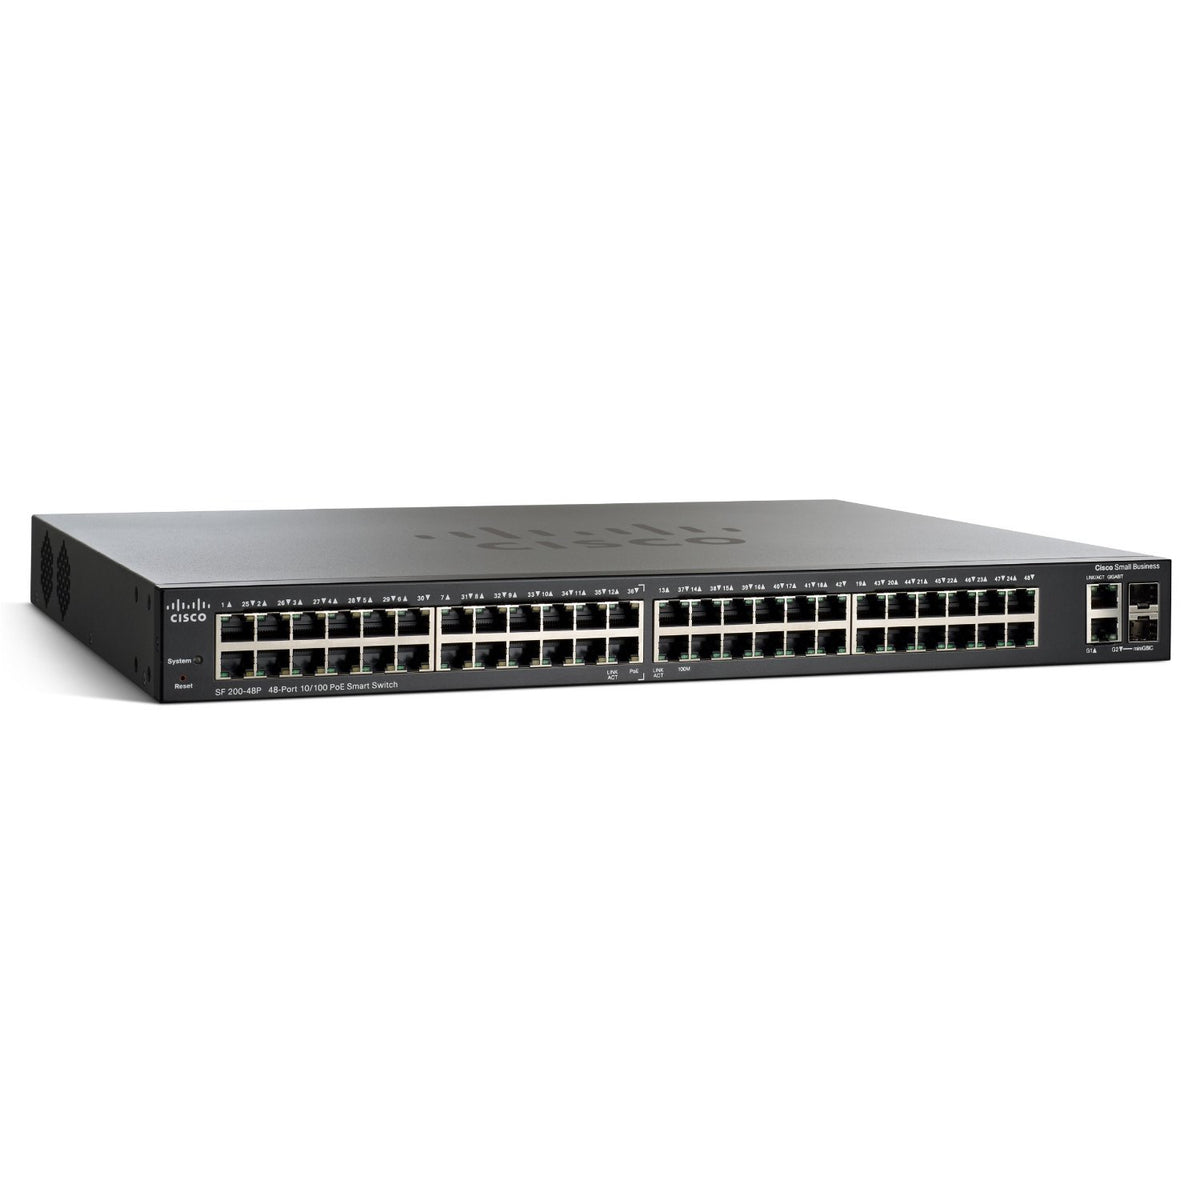 Slm248Pt-Na= - Cisco - Sf200-48P 48-Port 10/100 Poe Smart Switc